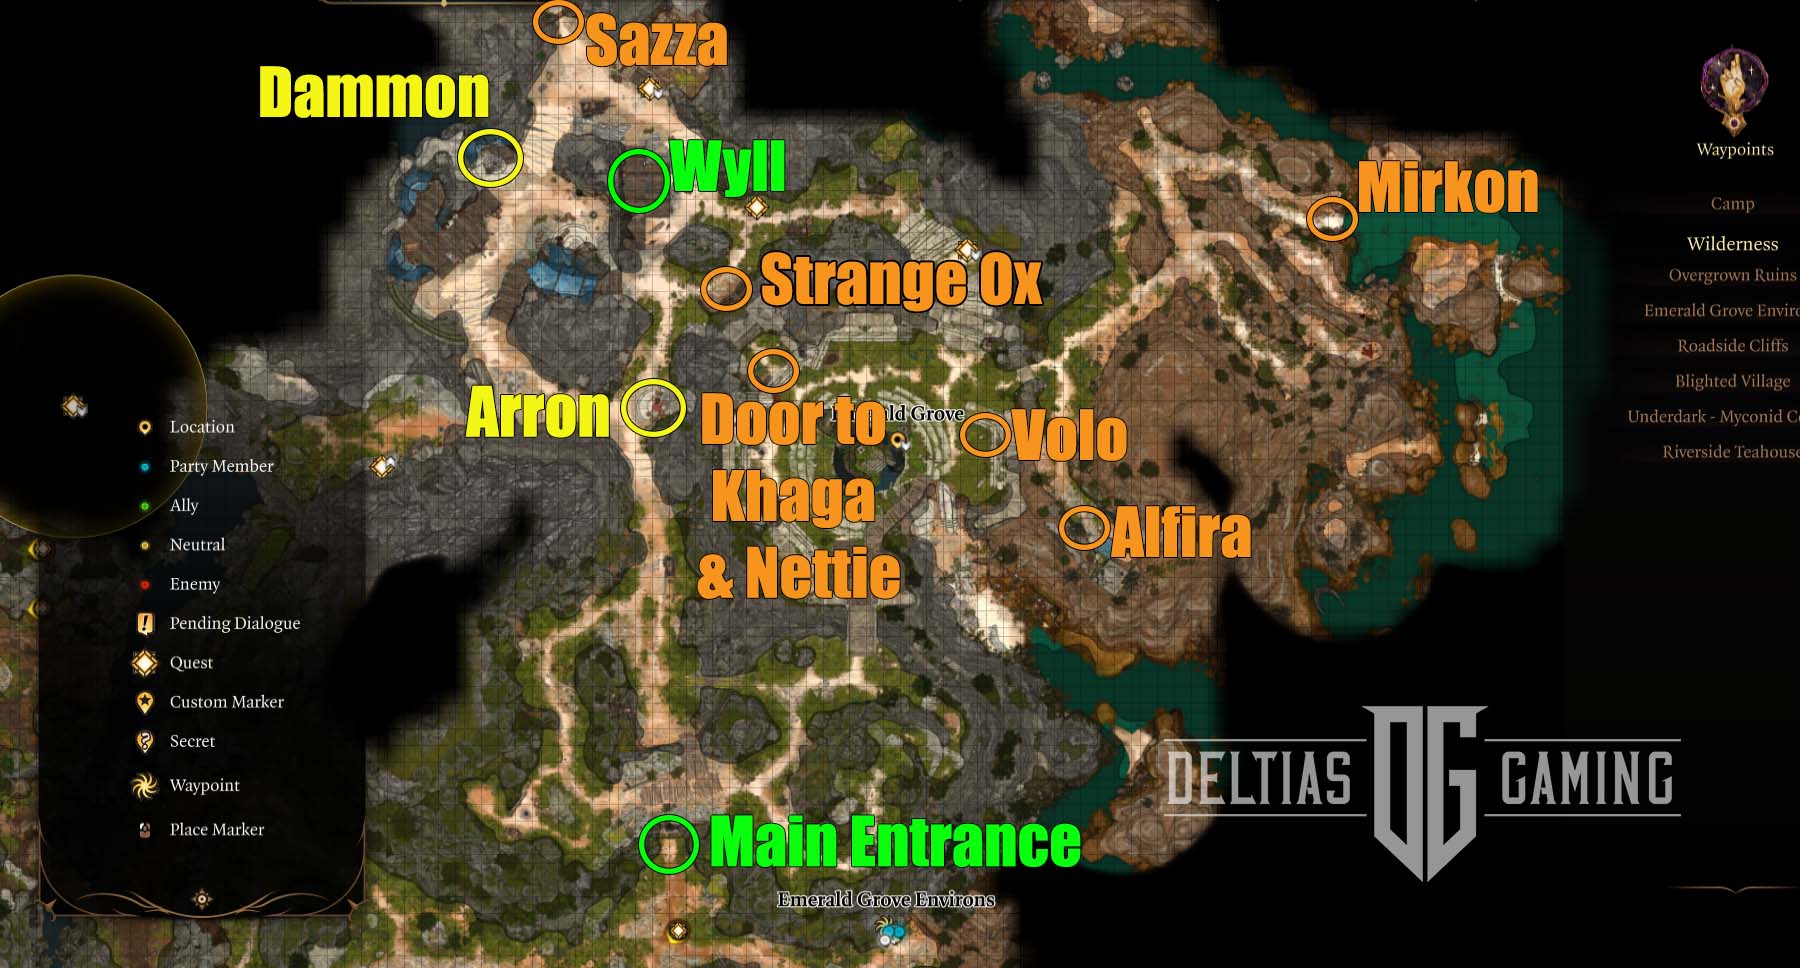 Baldur's Gate 3 Emerald Grove map Wyll location and more